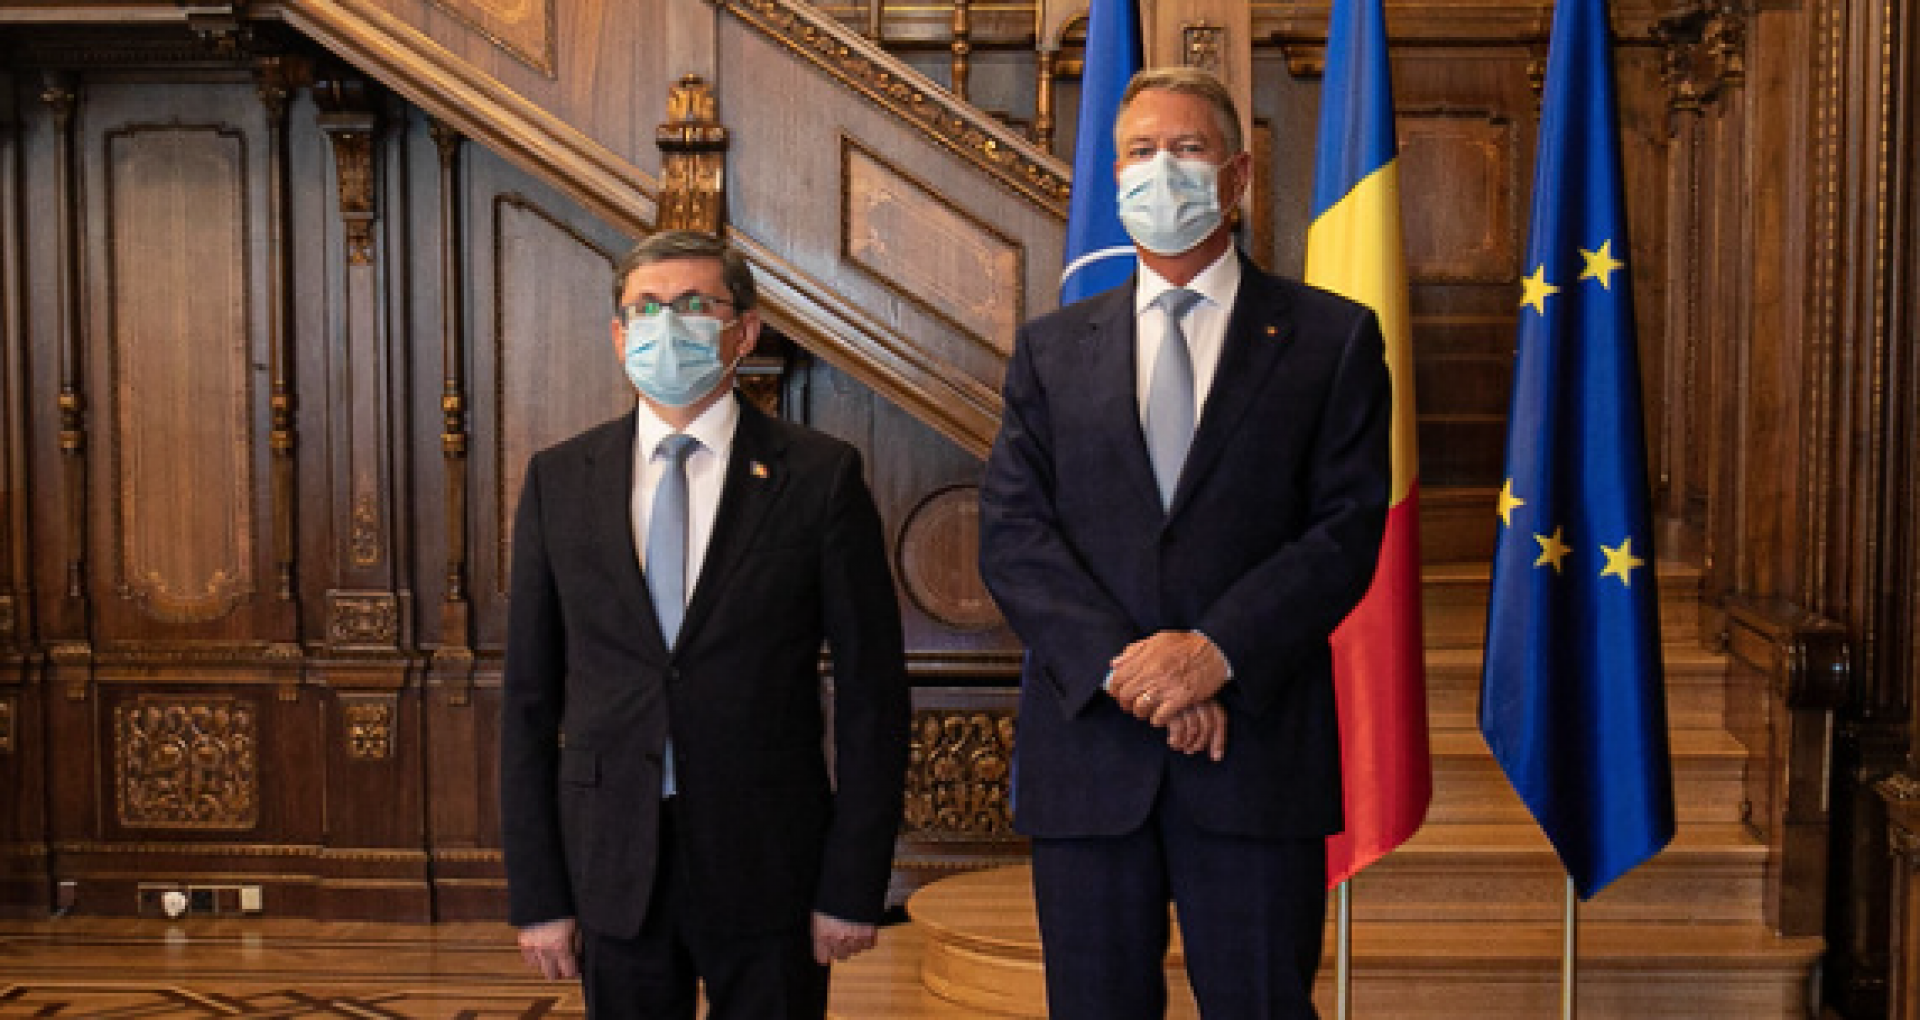 President of the Moldovan Parliament Igor Grosu Meets the Romanian President, Klaus Iohannis, in Bucharest